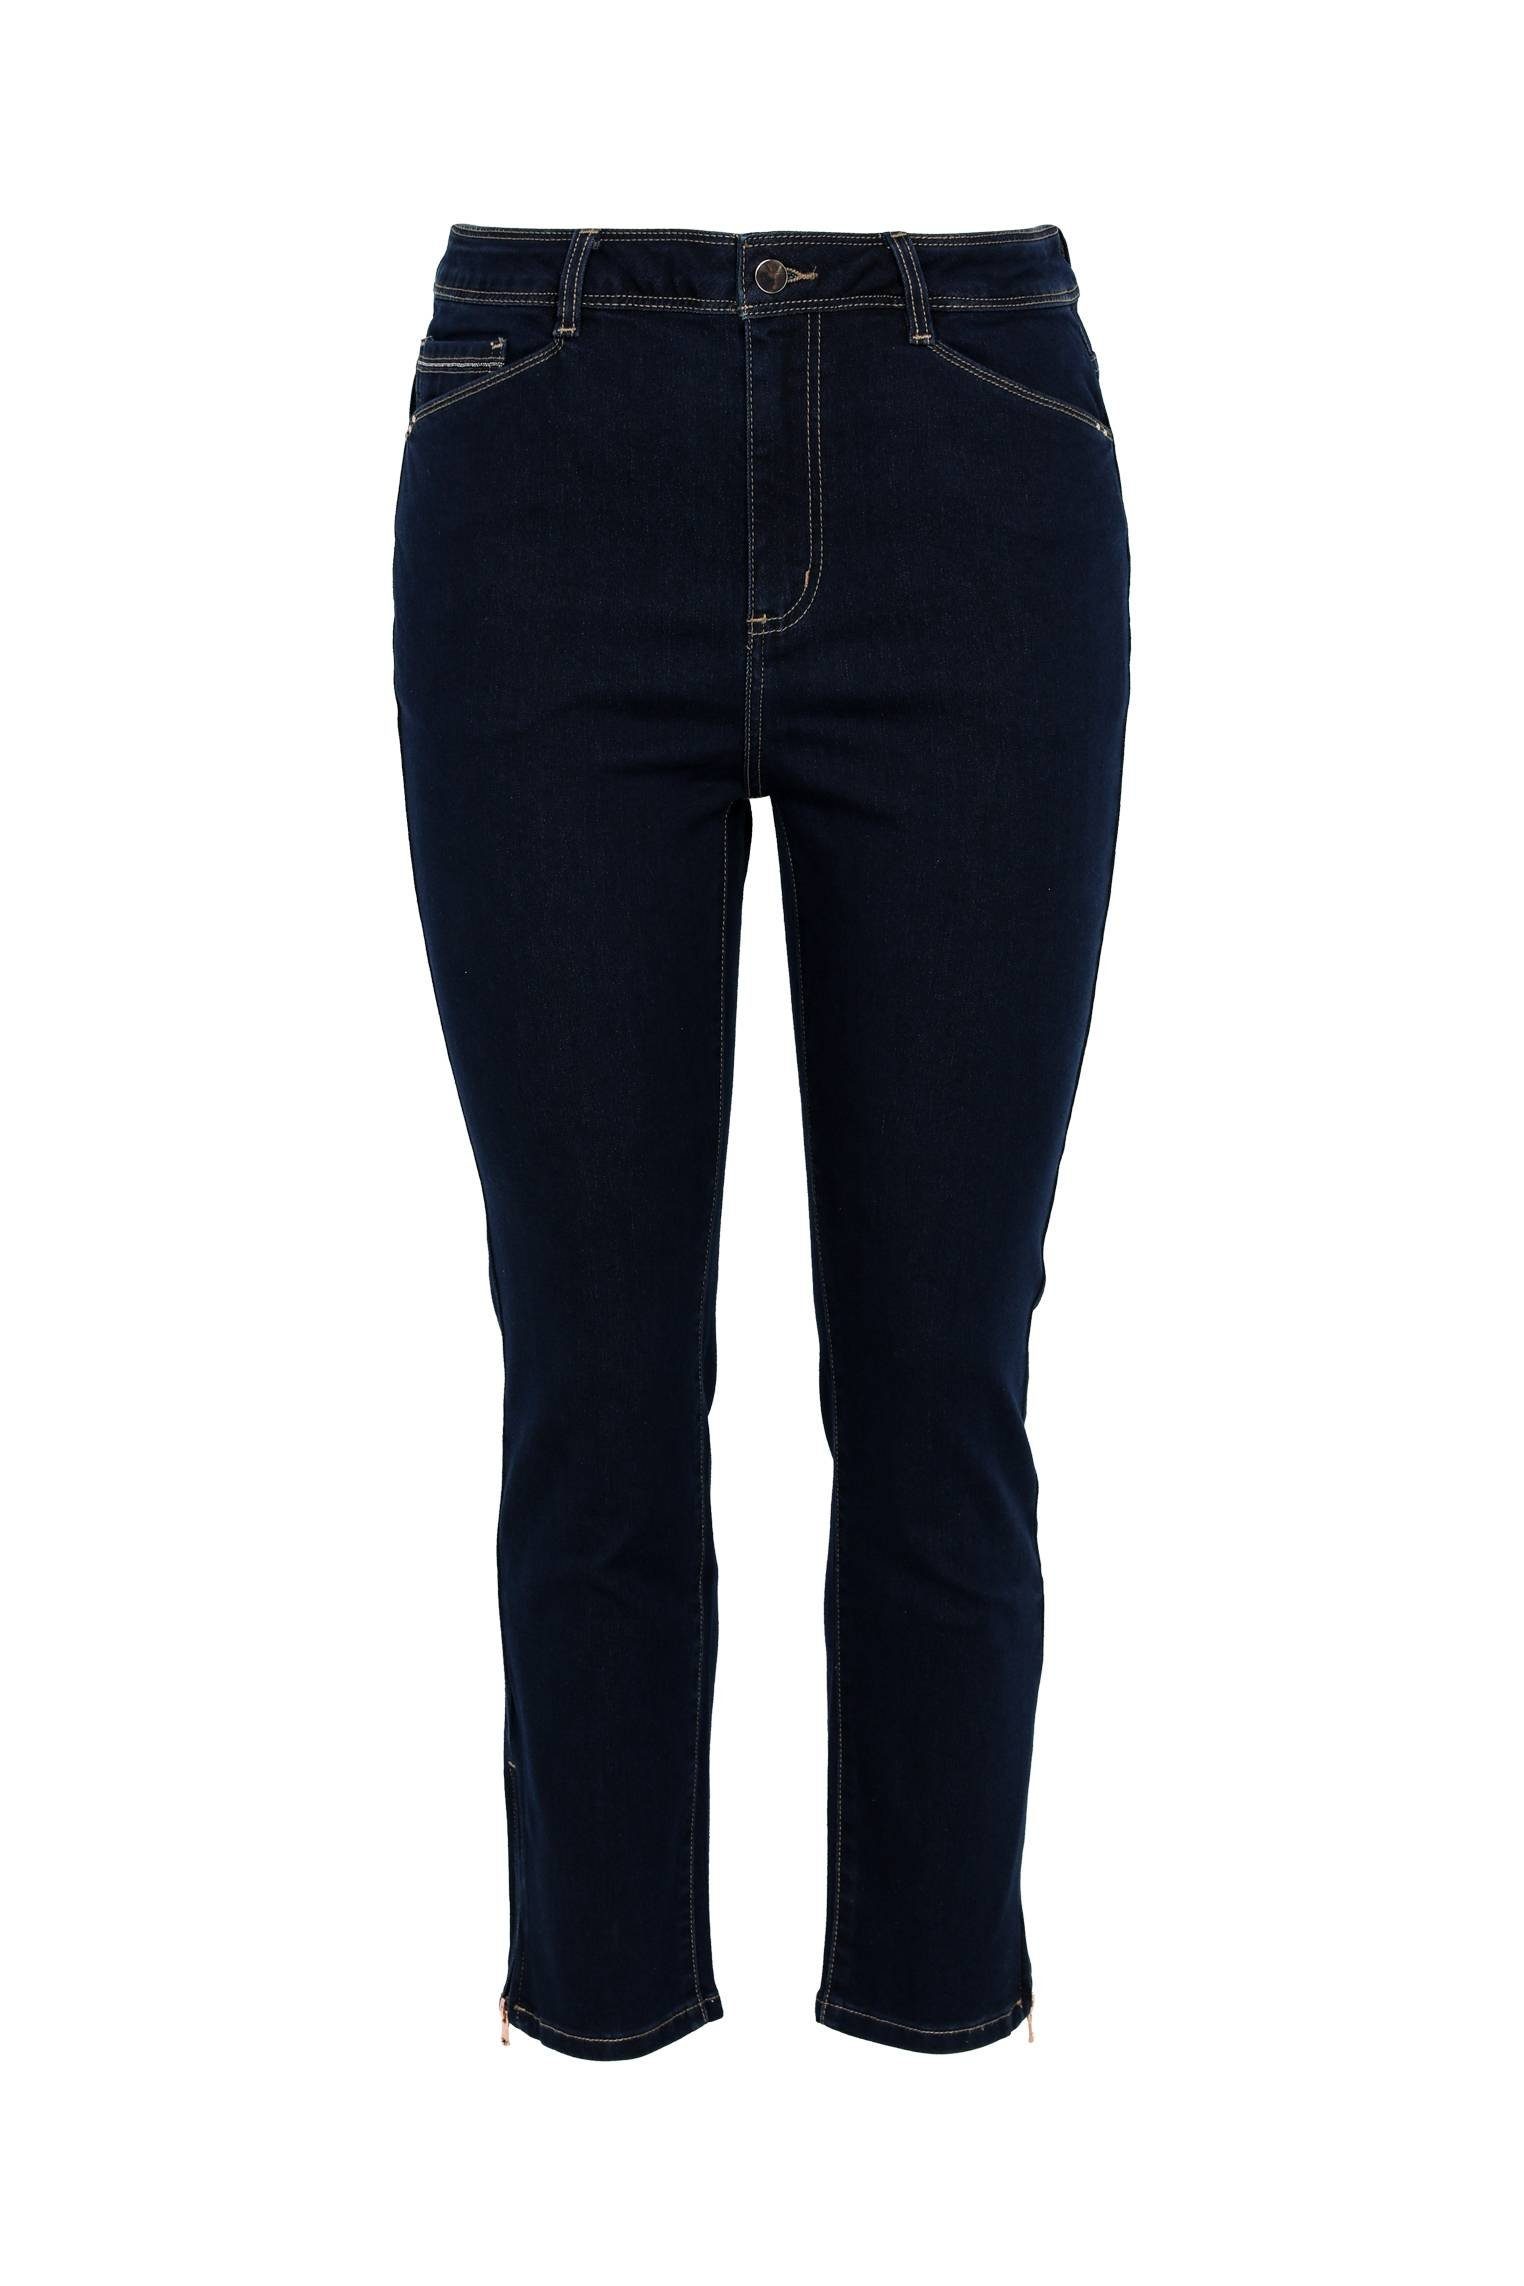 Paprika 5-Pocket-Jeans 7/8-Slim-Fit-Jeans Mit Reißverschluss Unten